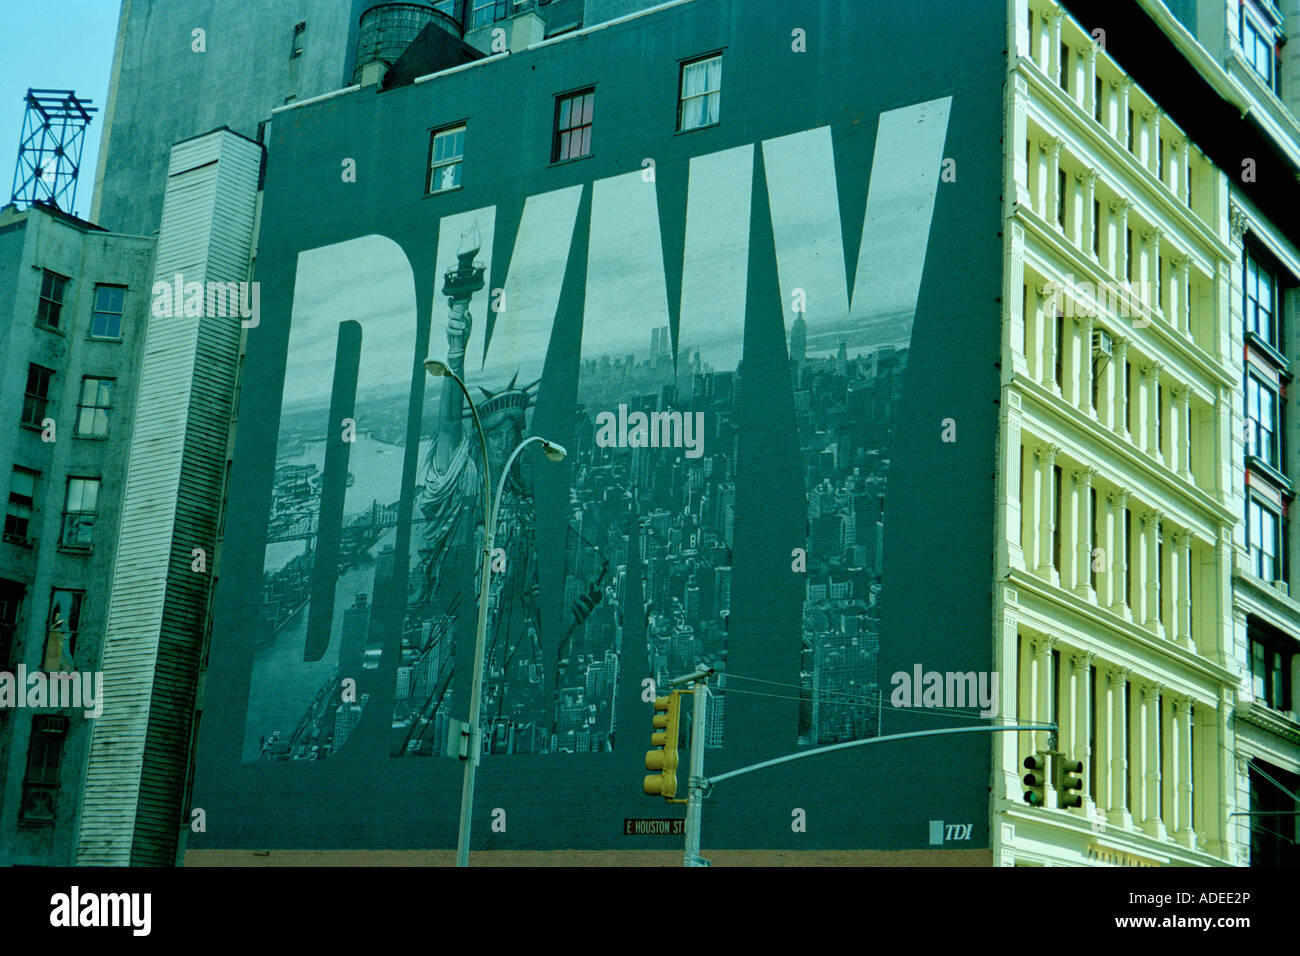 DKNY mural billboard on Houston Street Stock Photo - Alamy